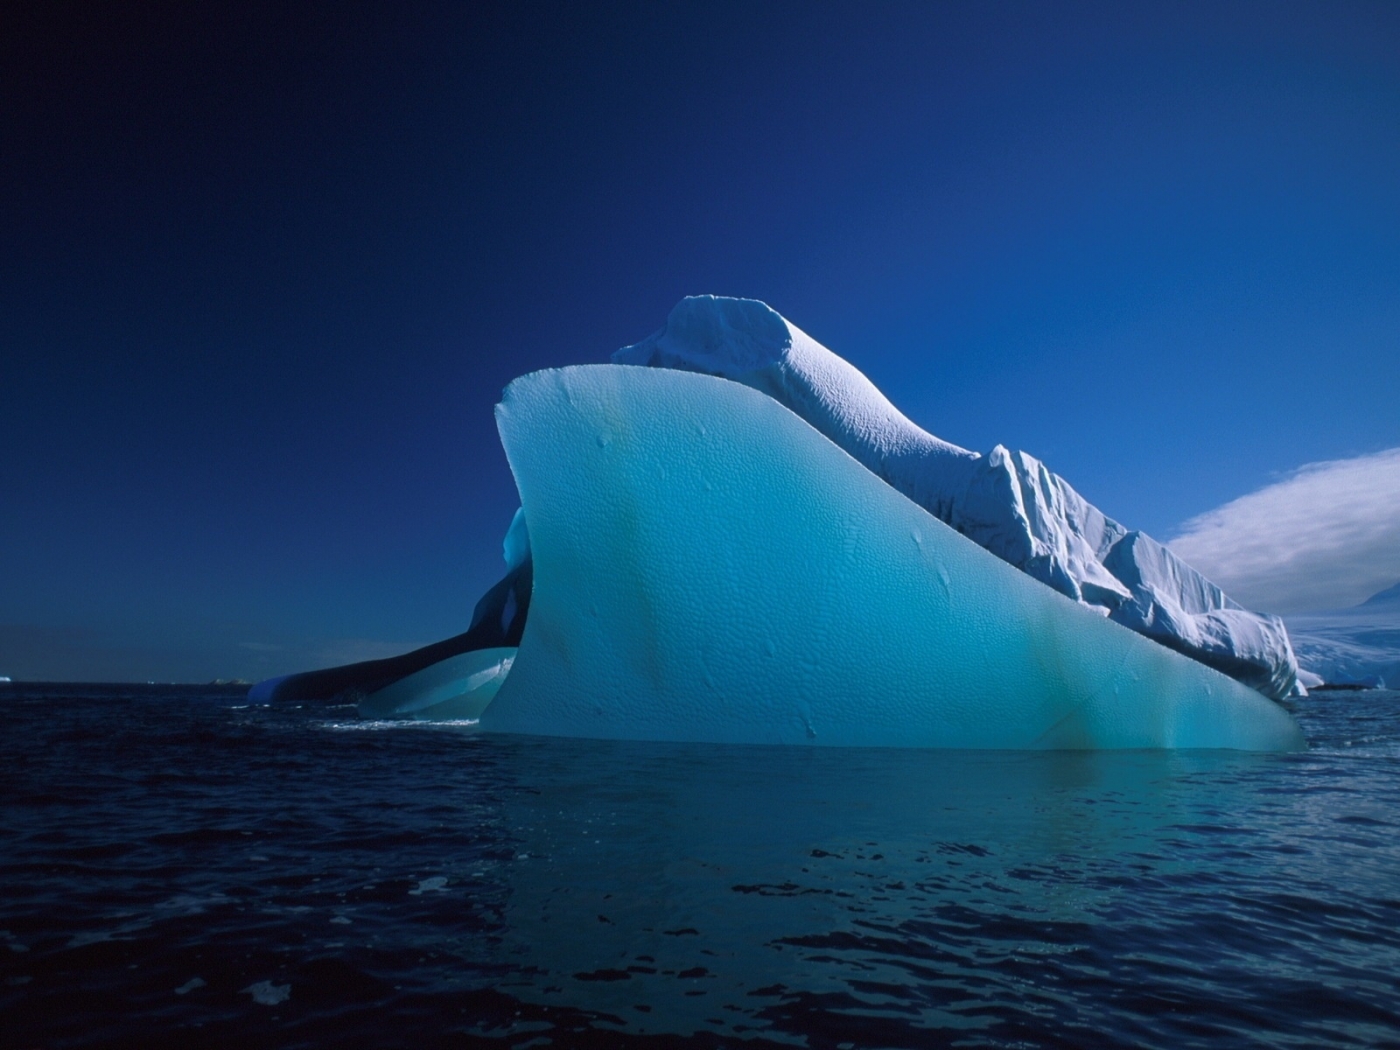 35187 descargar imagen paisaje, mar, icebergs, azul: fondos de pantalla y protectores de pantalla gratis